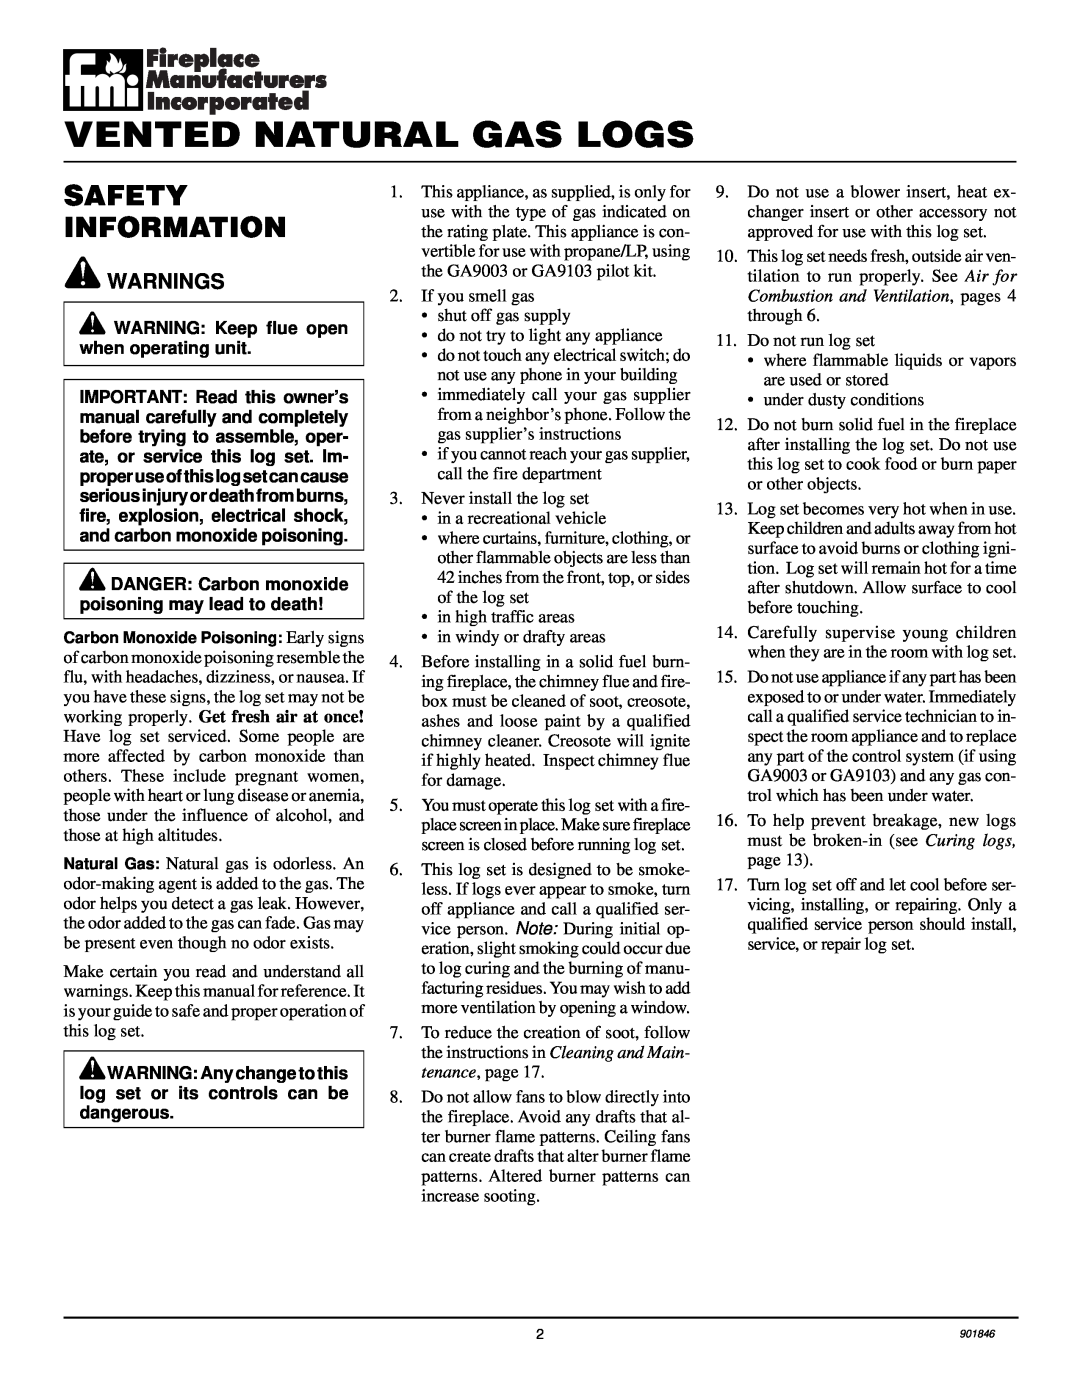 FMI FVTR18, FVTR24 installation manual Vented Natural Gas Logs, Safety Information 